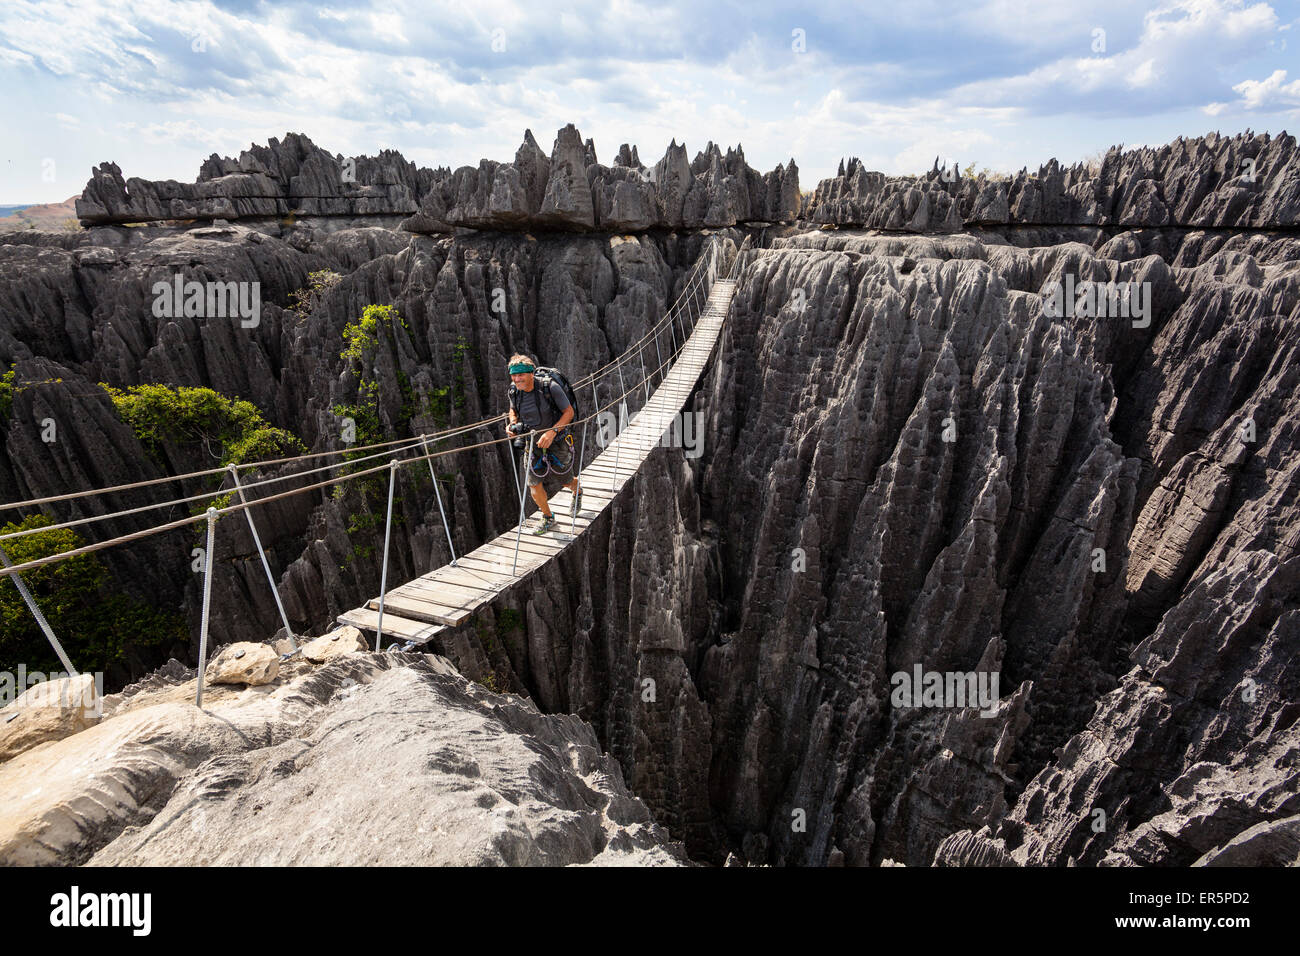 Hängebrücke in Tsingy de Bemaraha Nationalpark, Mahajanga, Madagaskar, Afrika Stockfoto